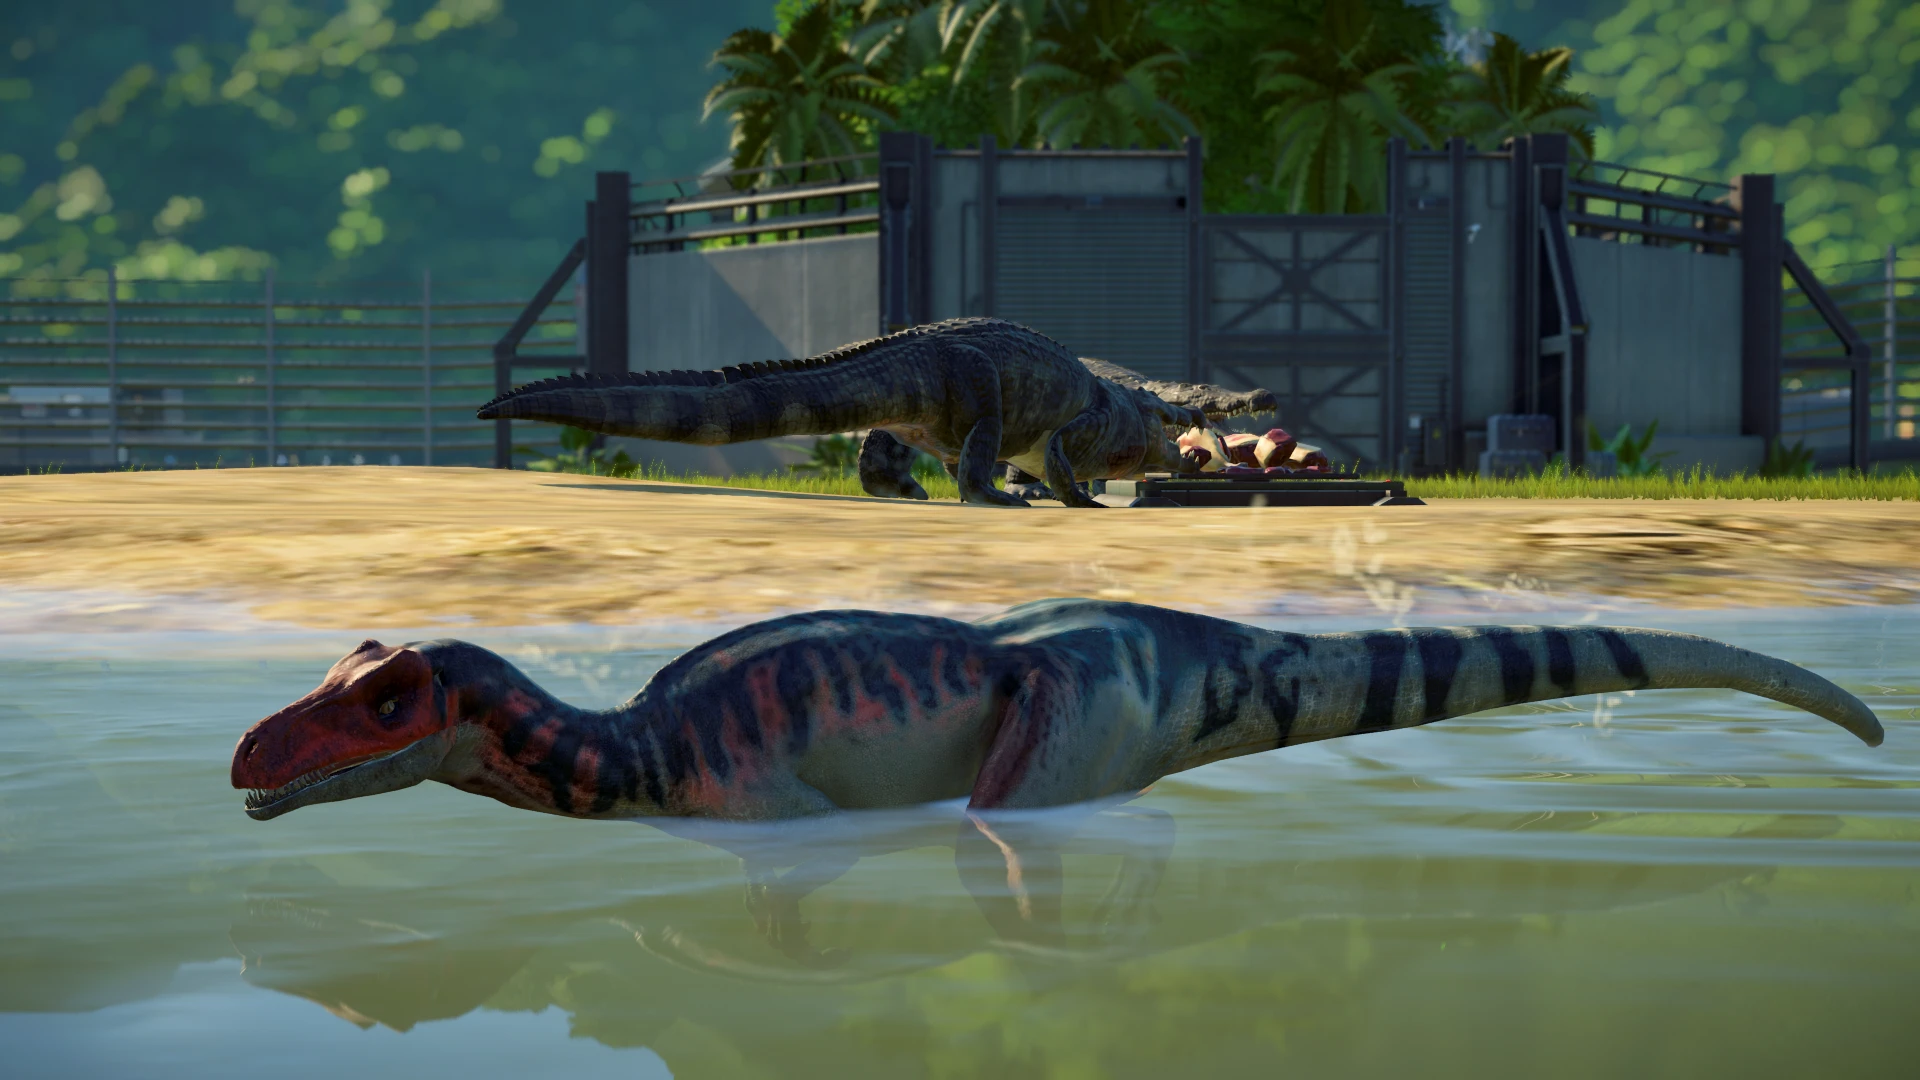 The Deinosuchus Tournaments is - Jurassic World: The Game